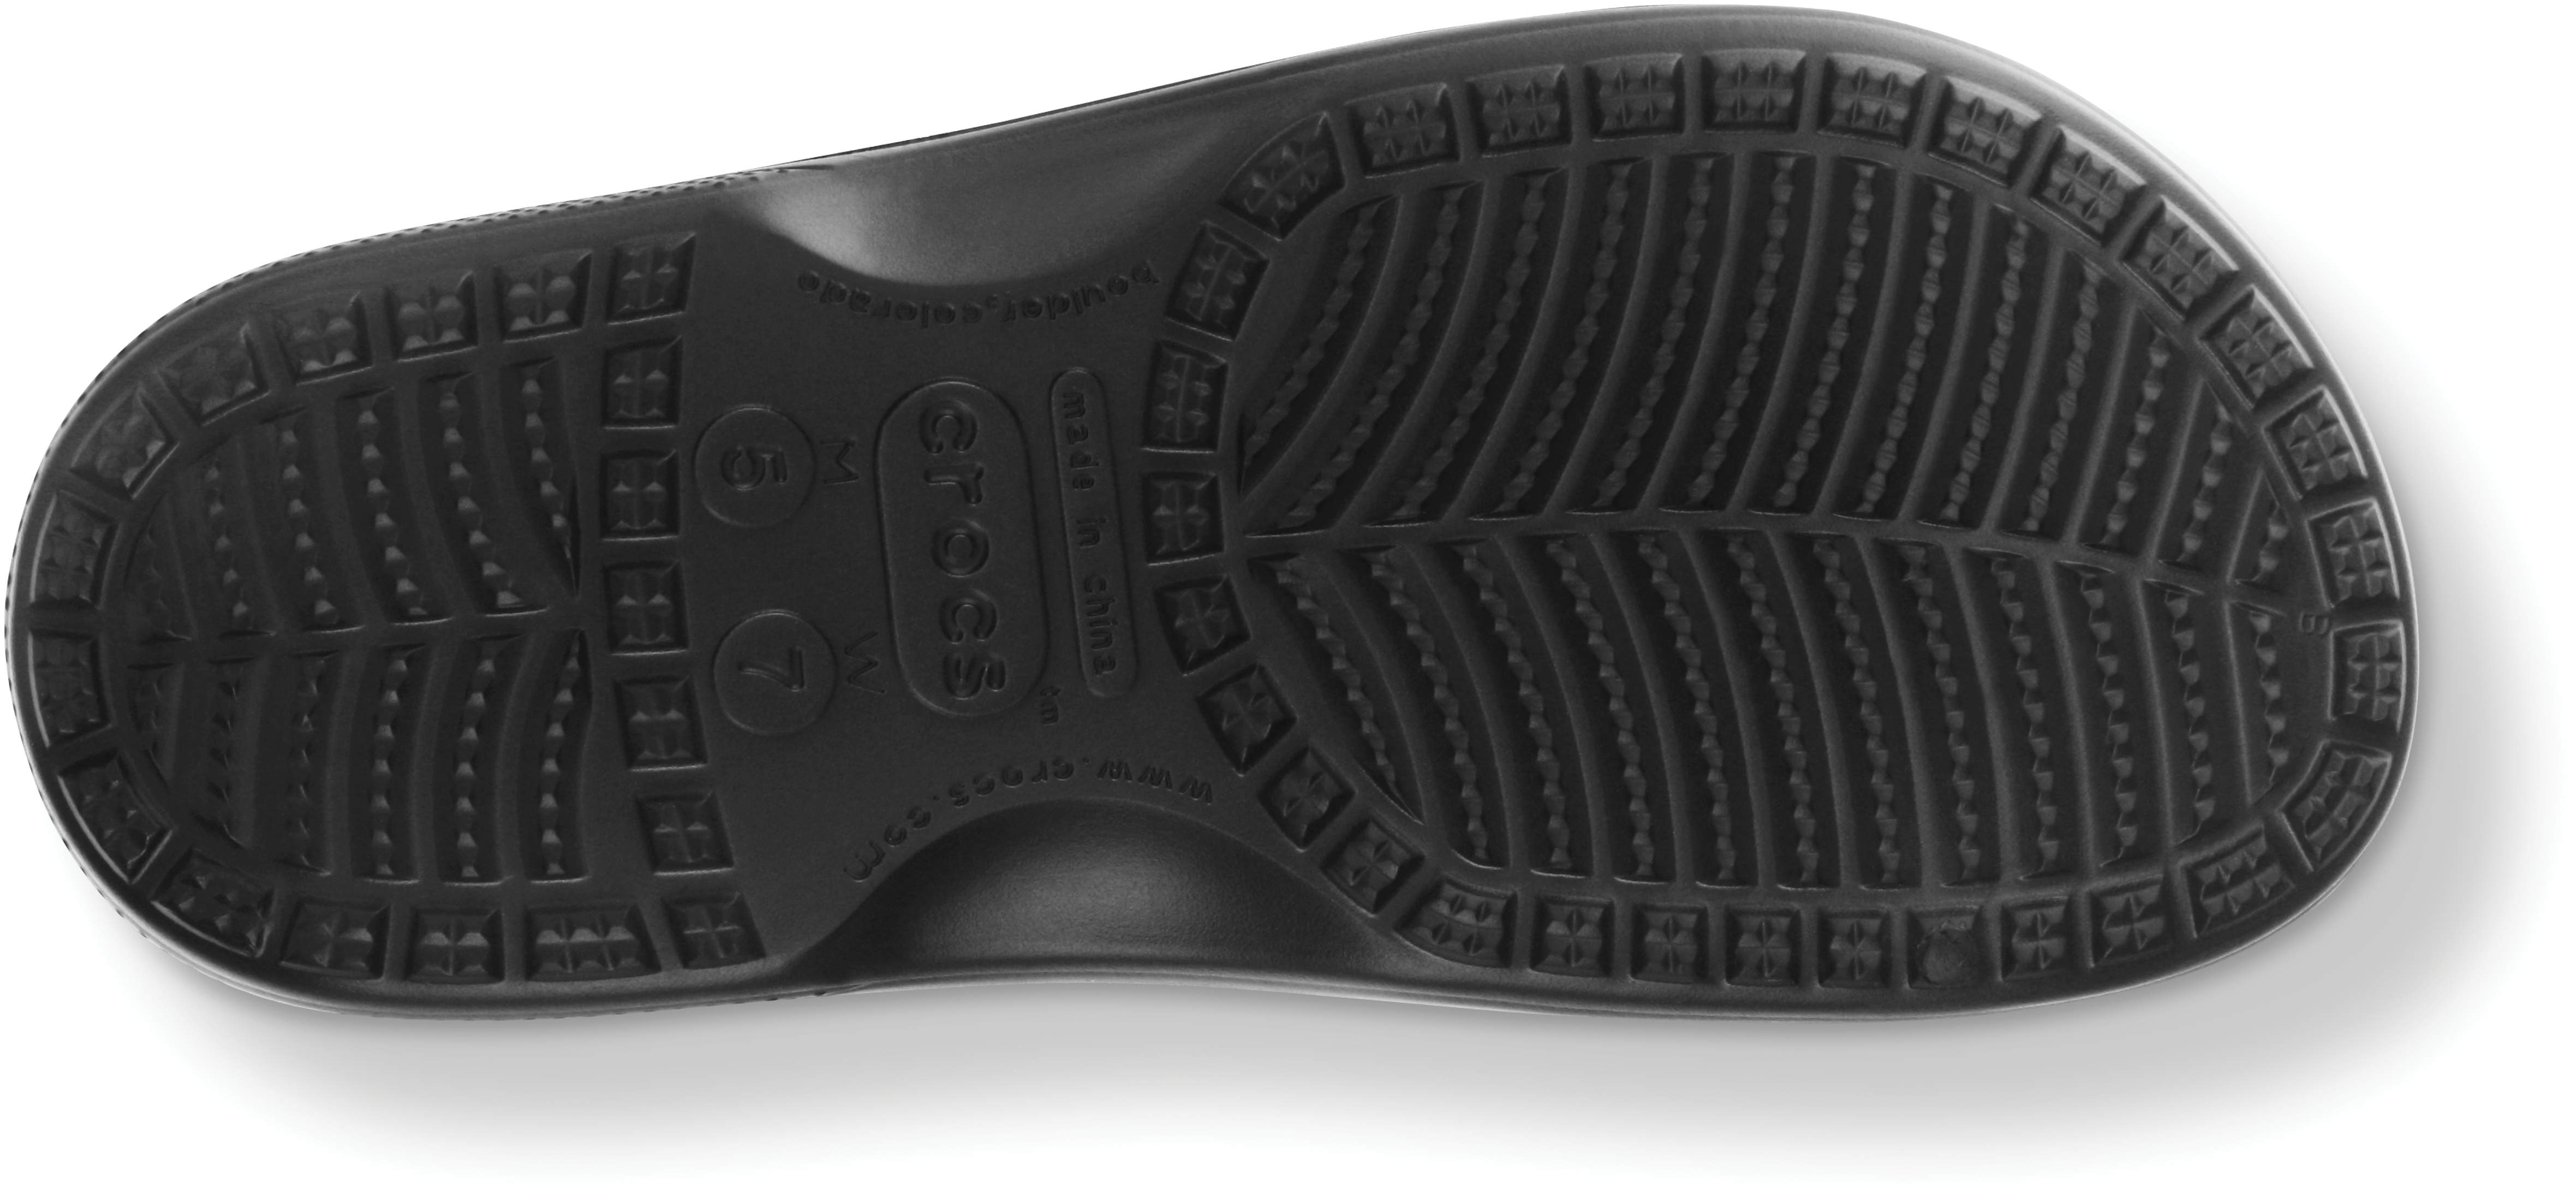 crocs baya slide sandals